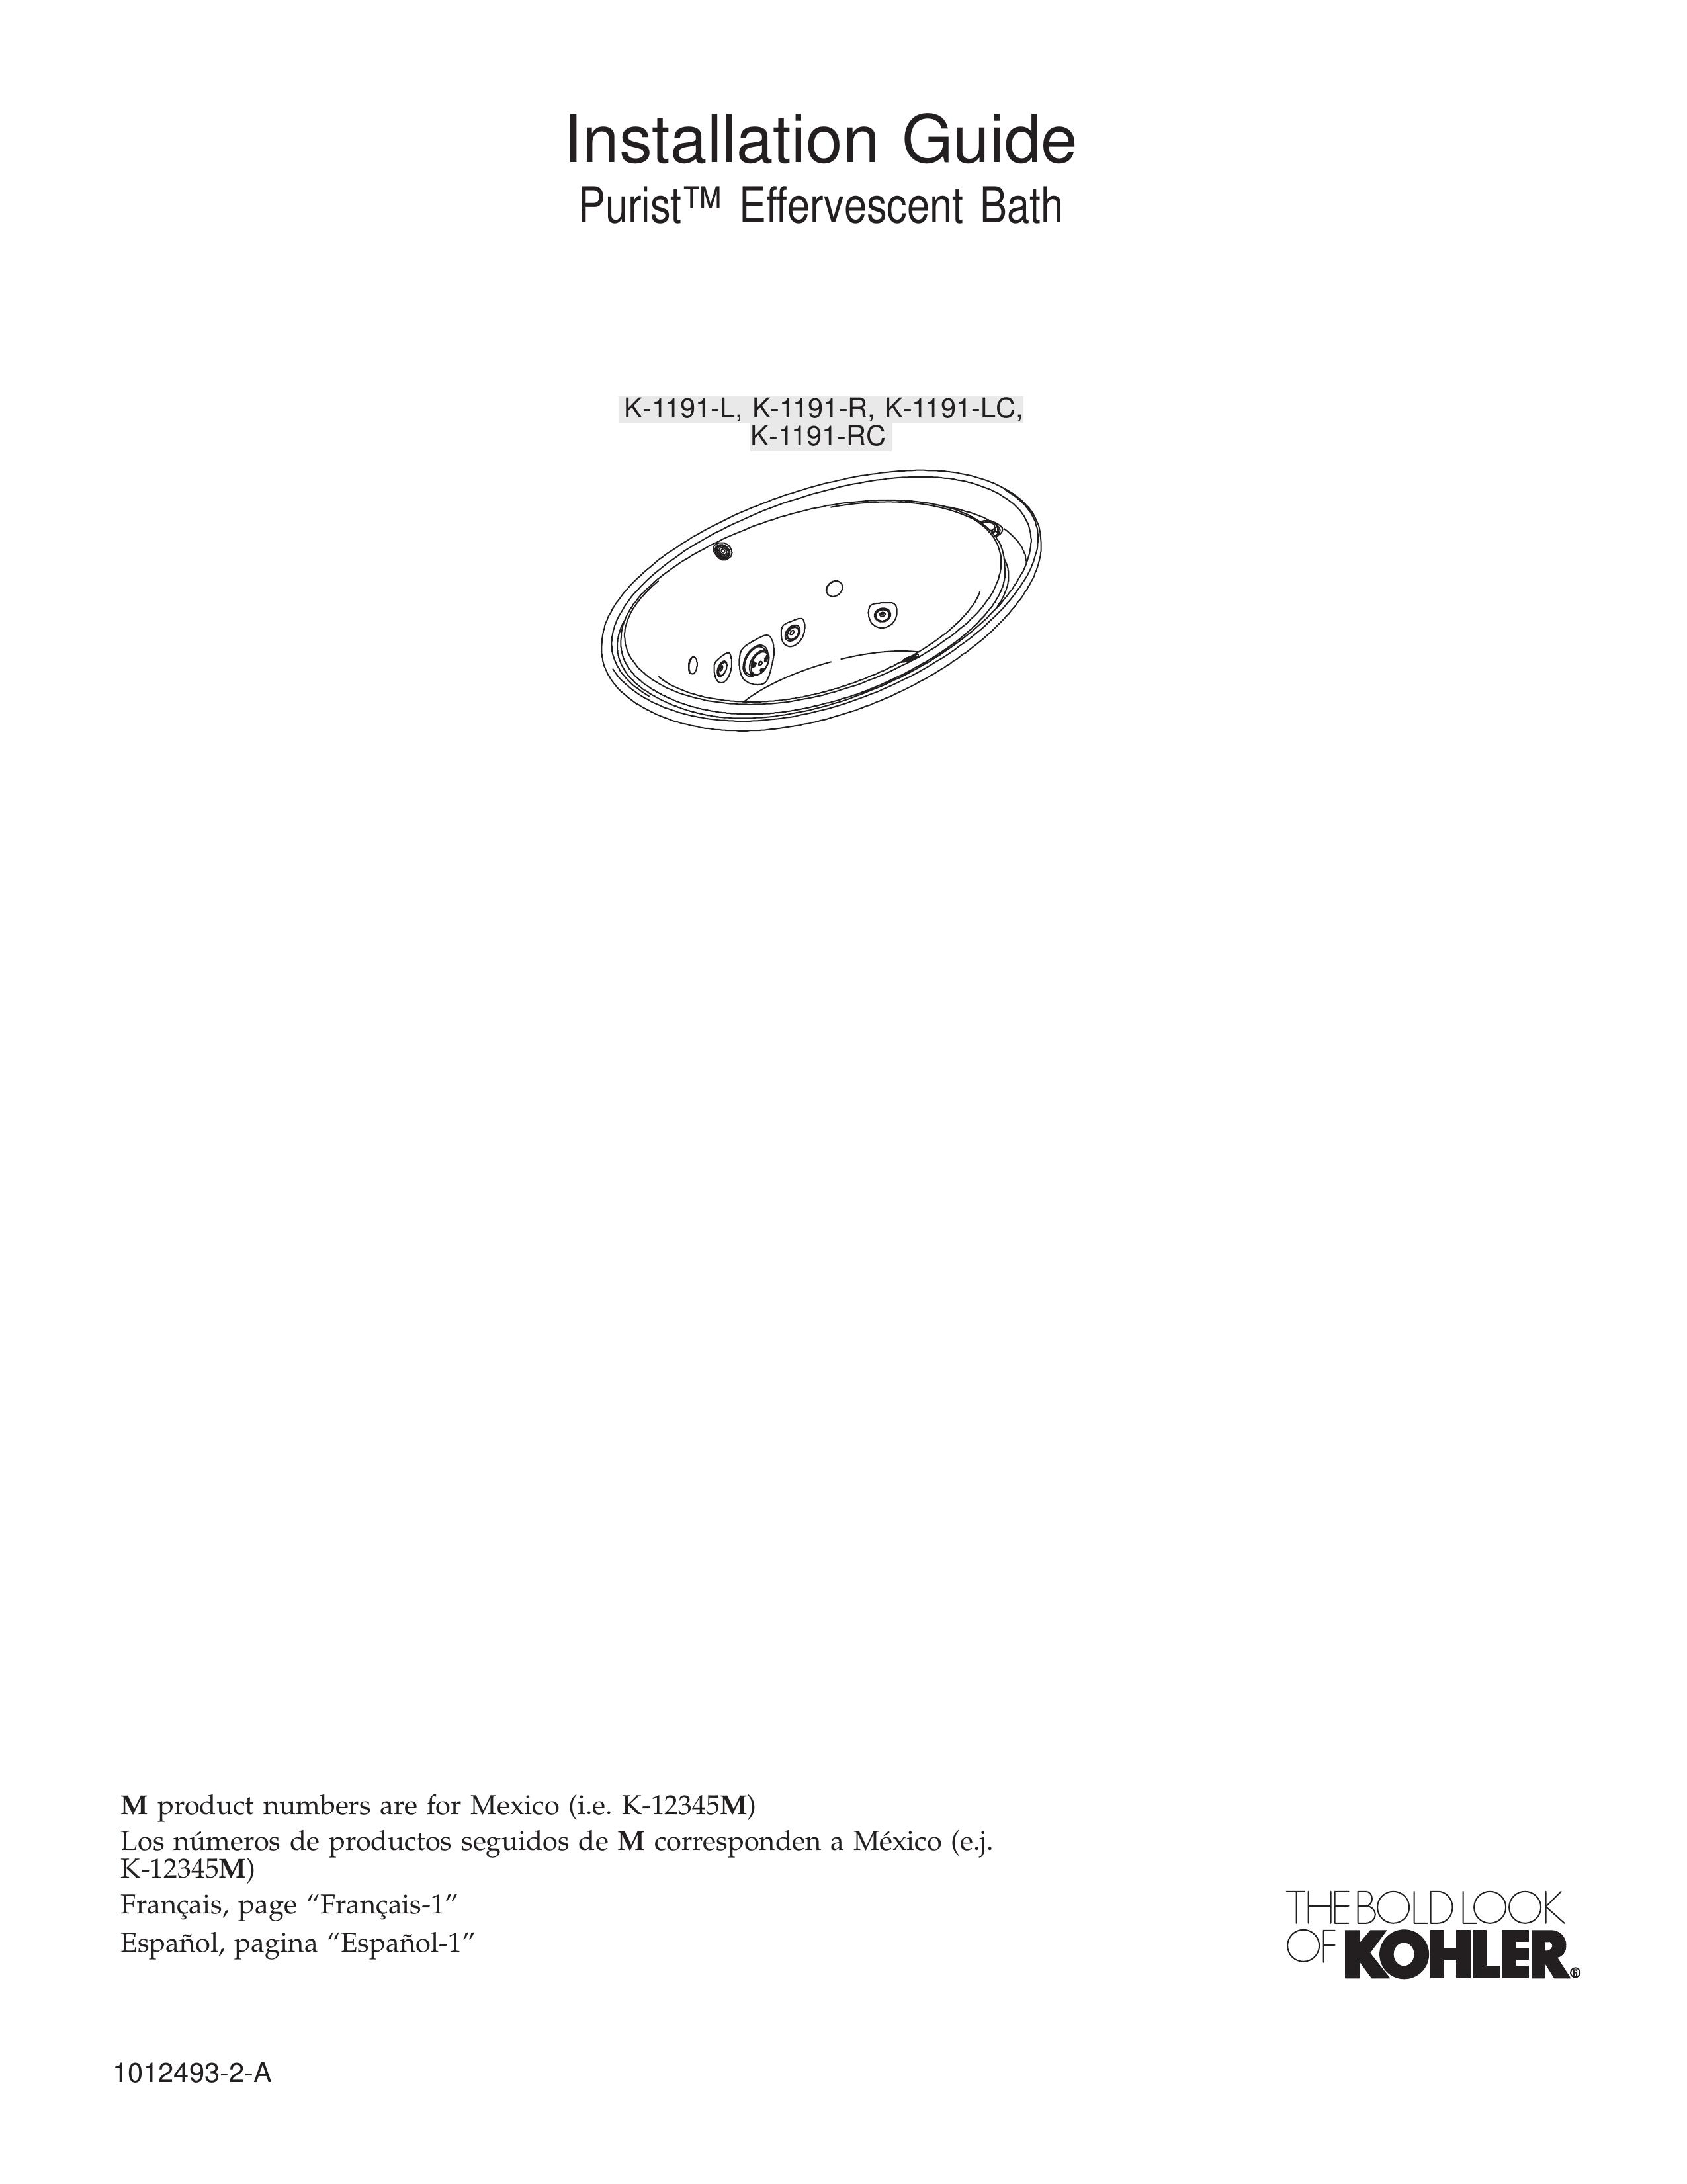 Kohler K-1191-RC Bathroom Aids User Manual